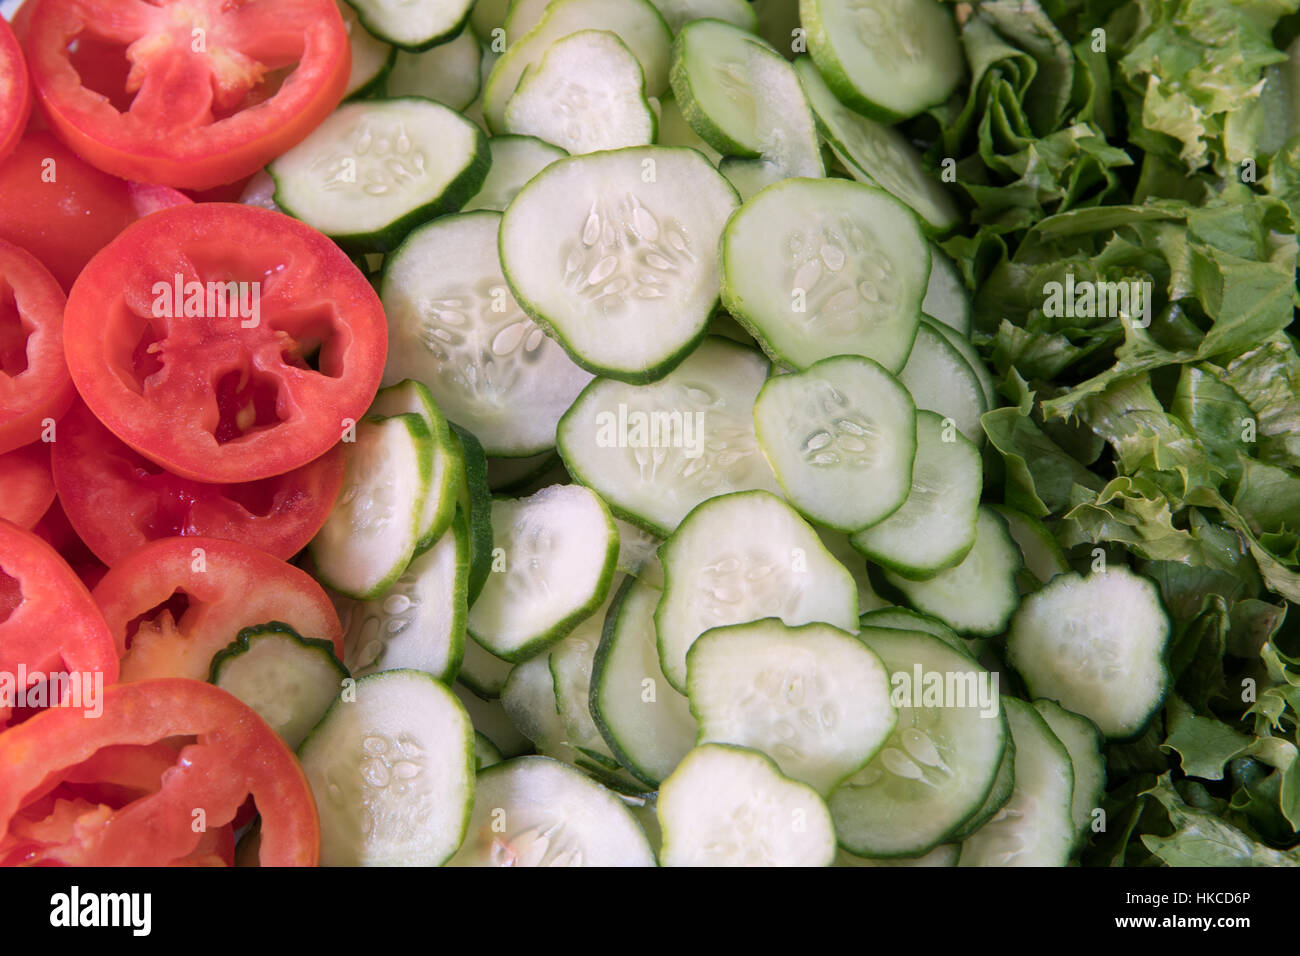 vegetable salad Stock Photo